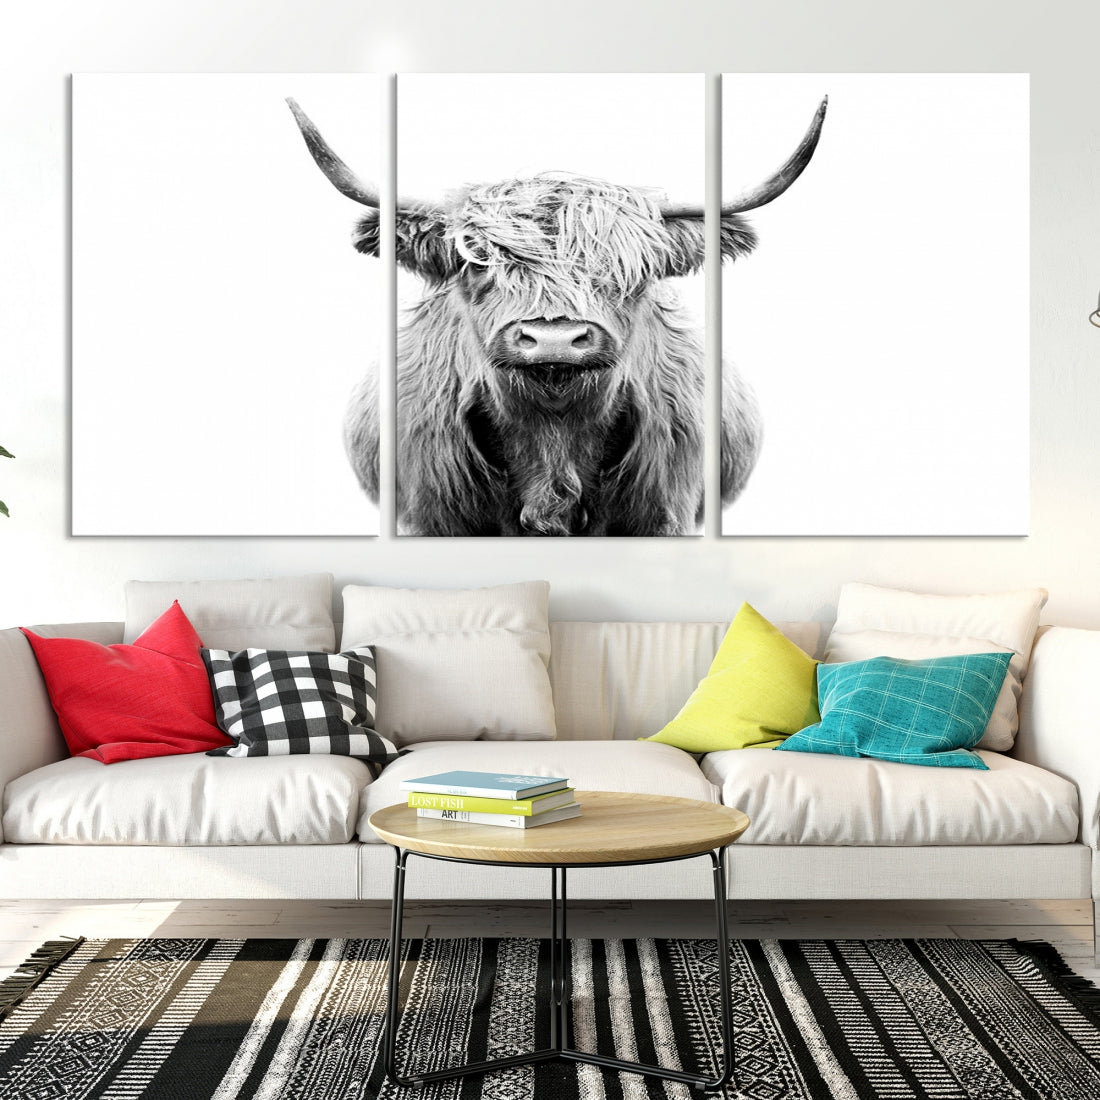 Large Scottish Highland Cow for Farmhouse Decor Wall Art Canvas Print